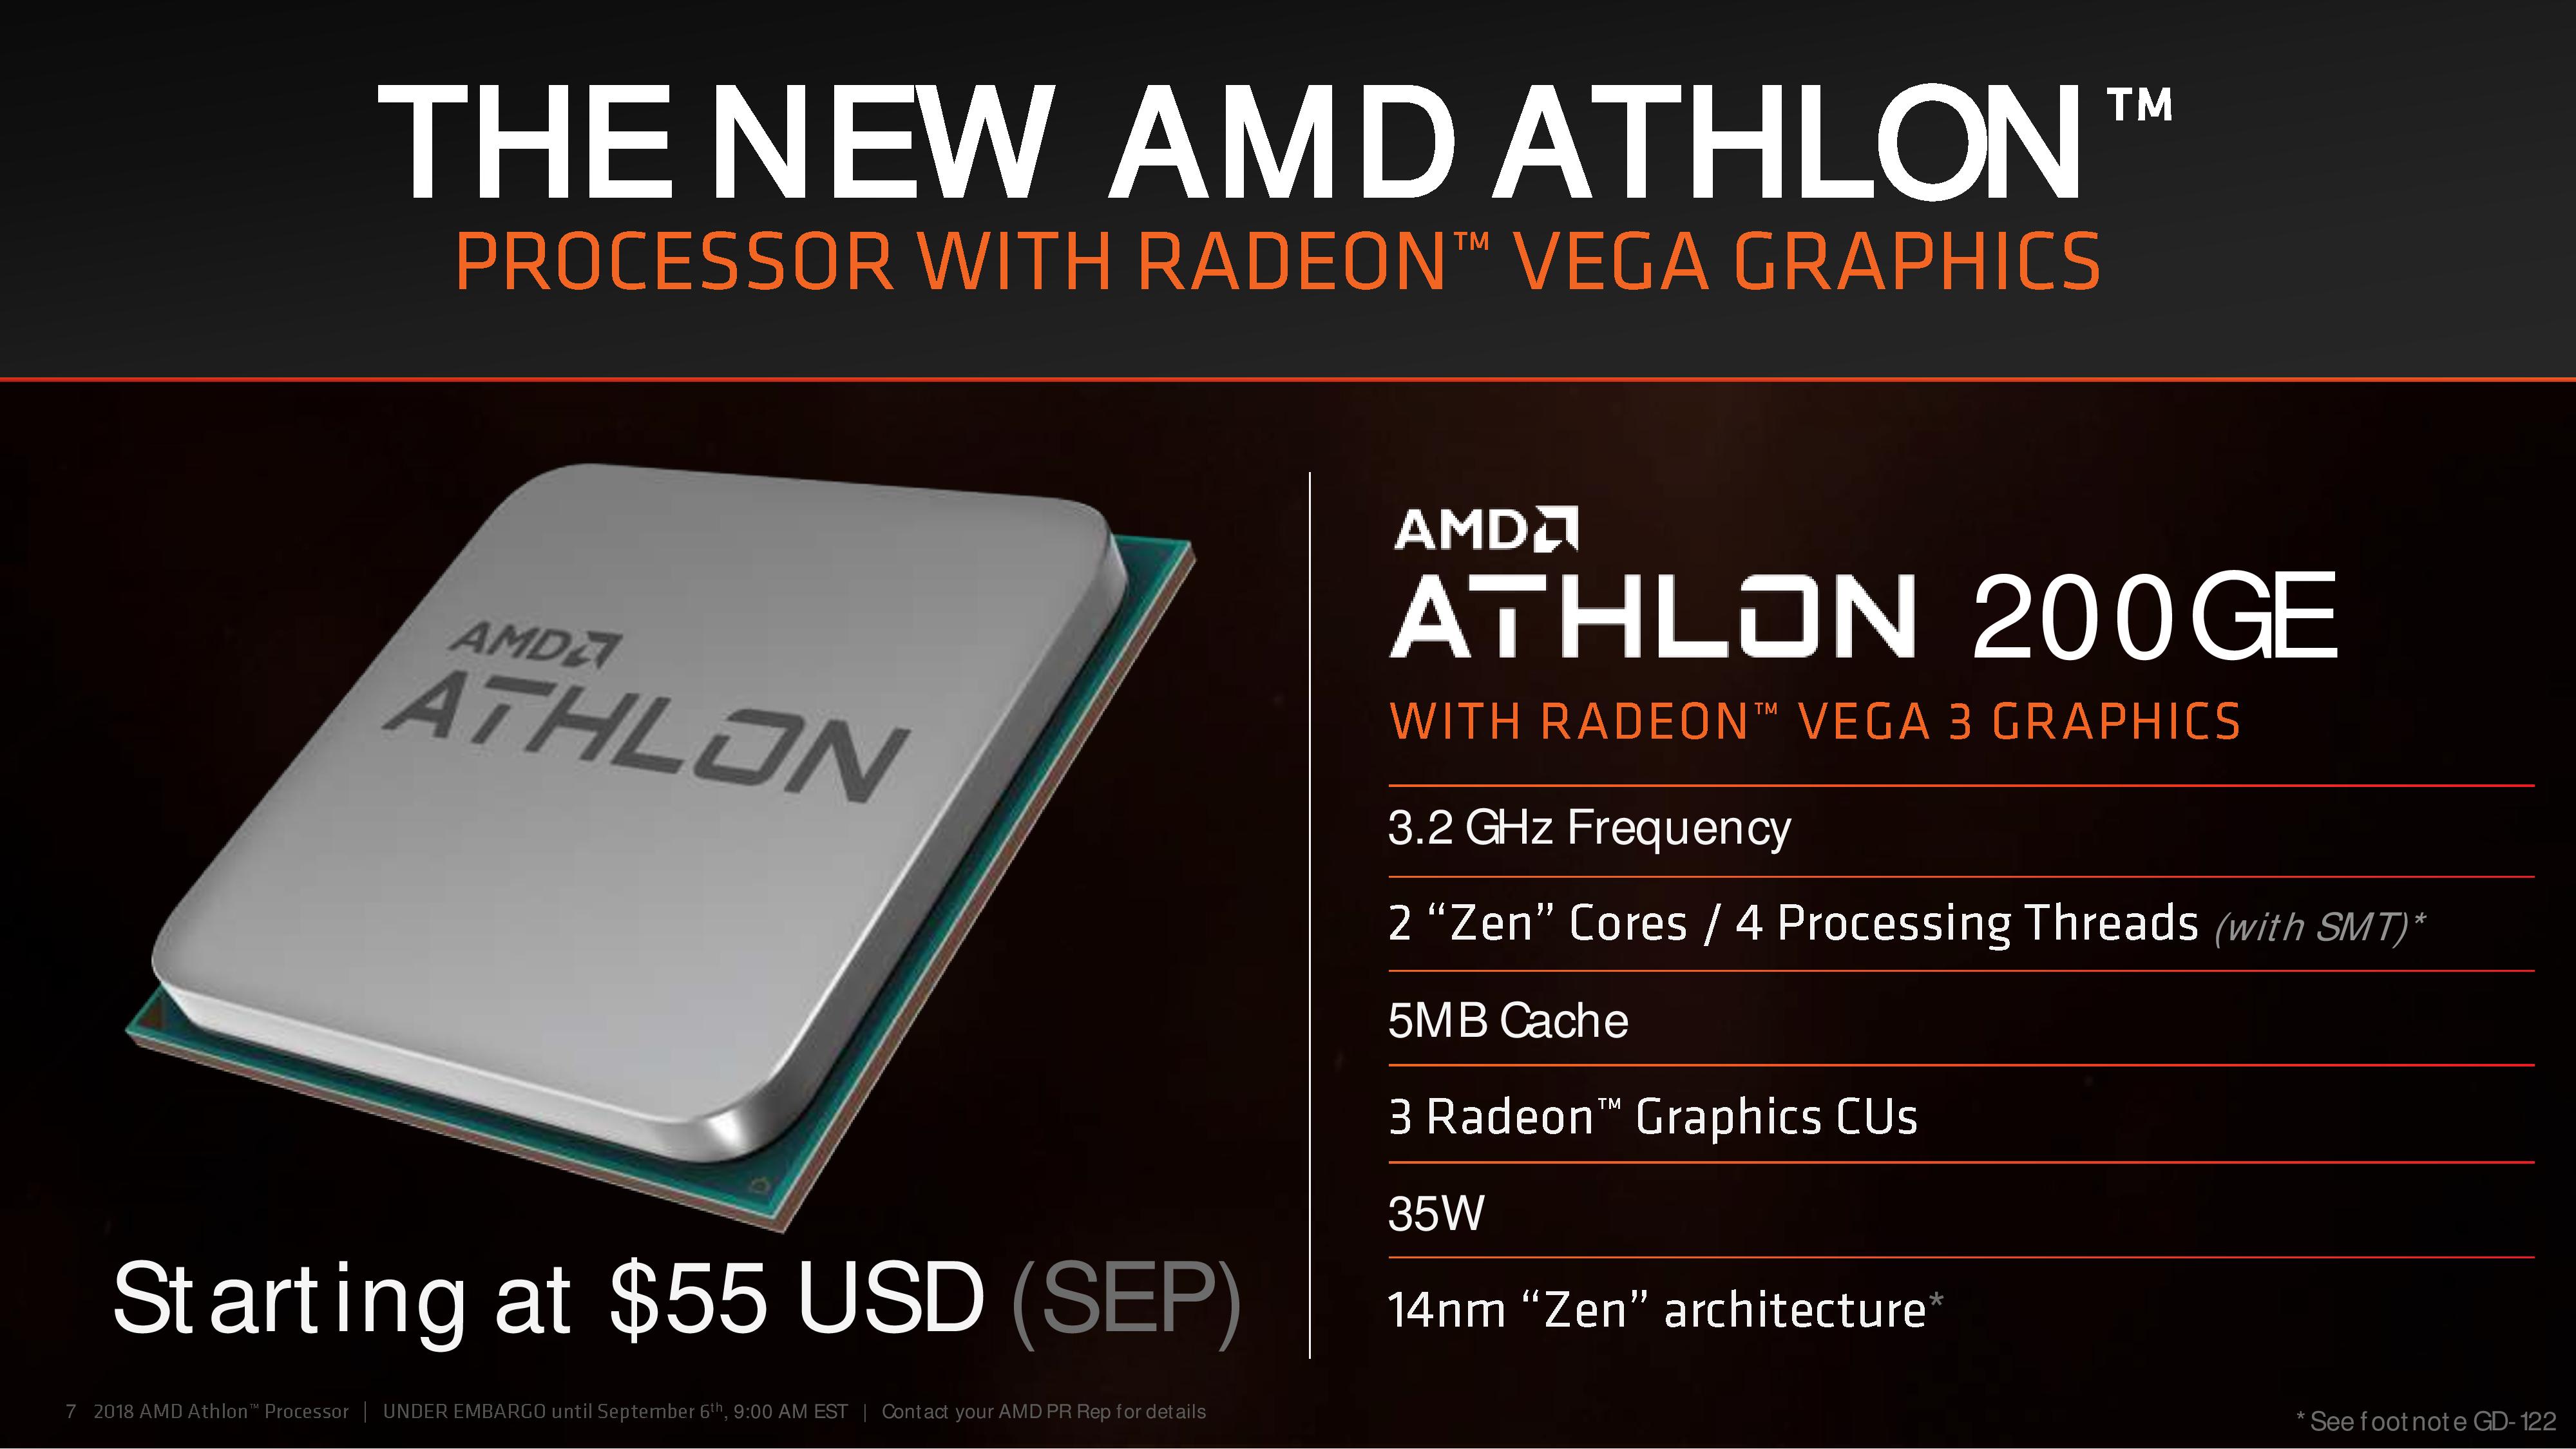 AMD Announces New $55 Low-Power Processor: Athlon 200GE